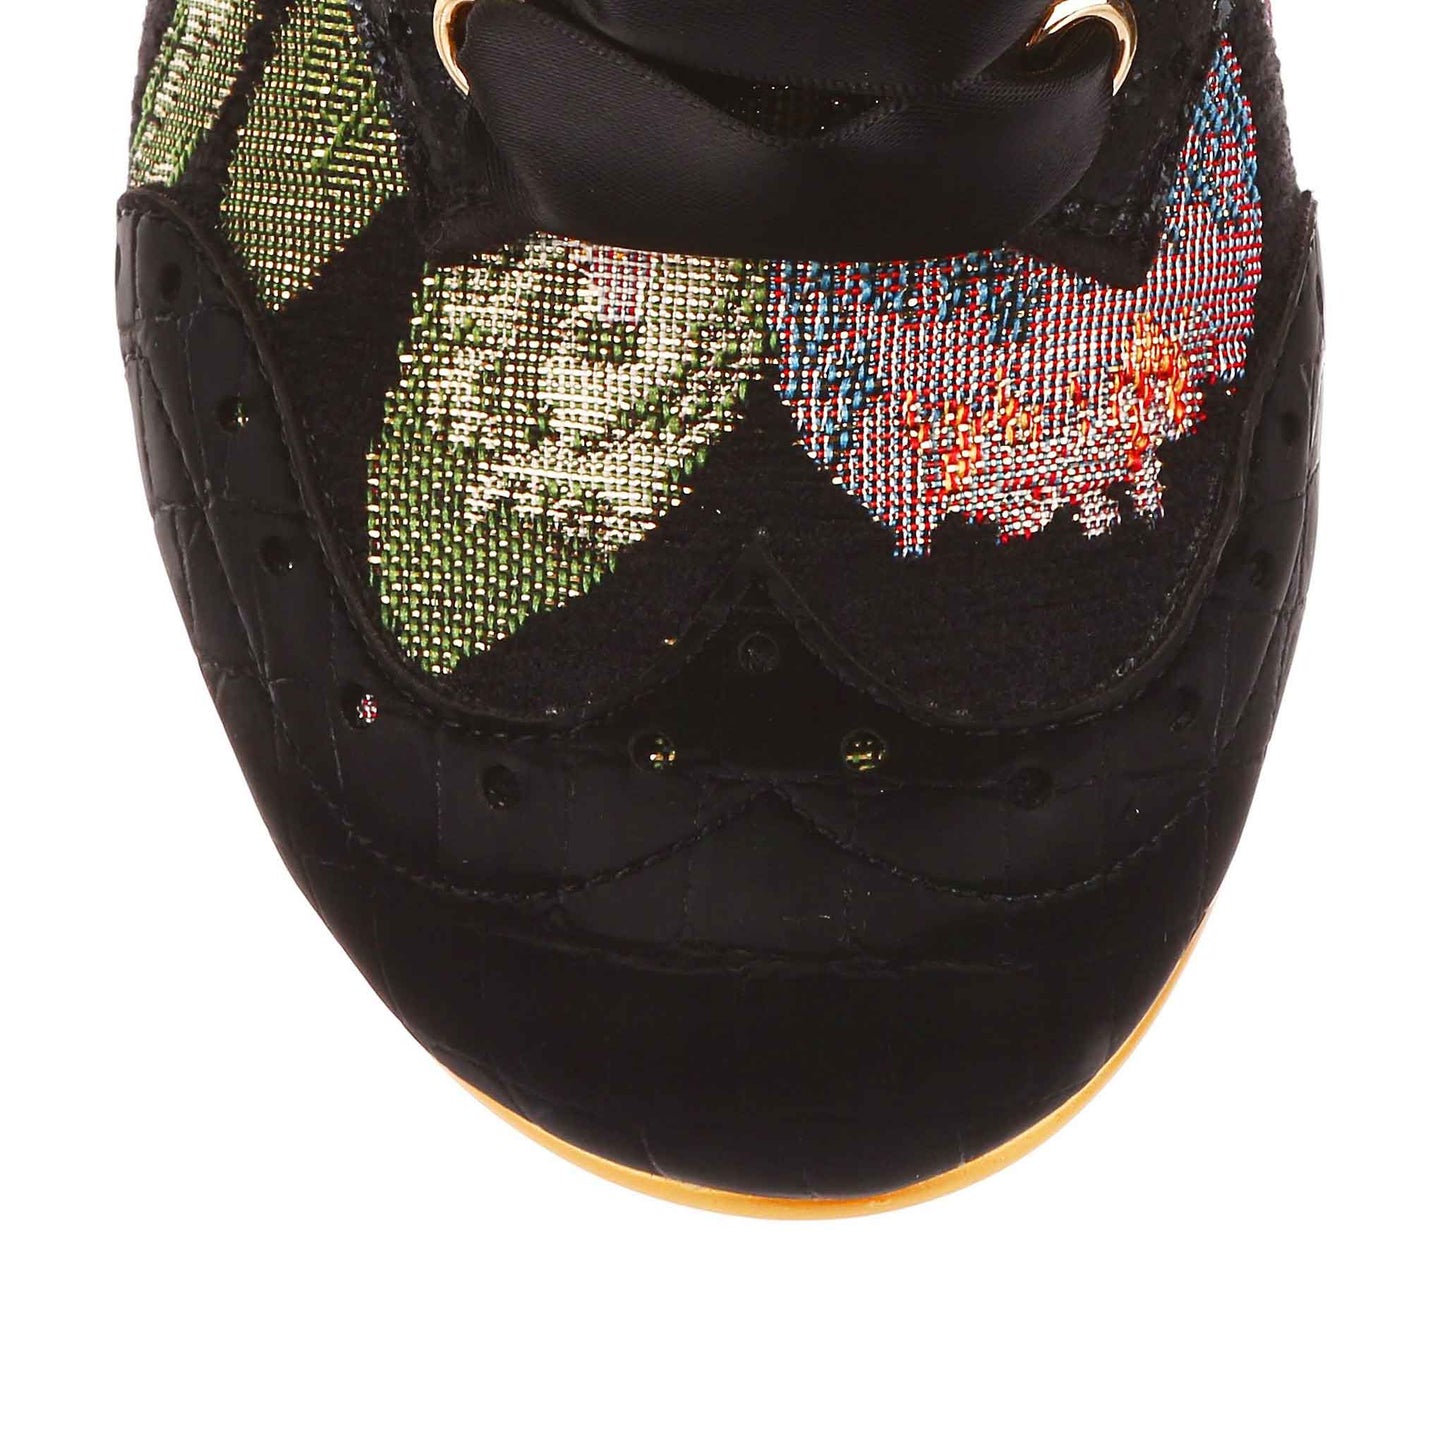 Irregular Choice Women's 4136-82 Cobbles Lace-Up Heel Shoes Black Floral